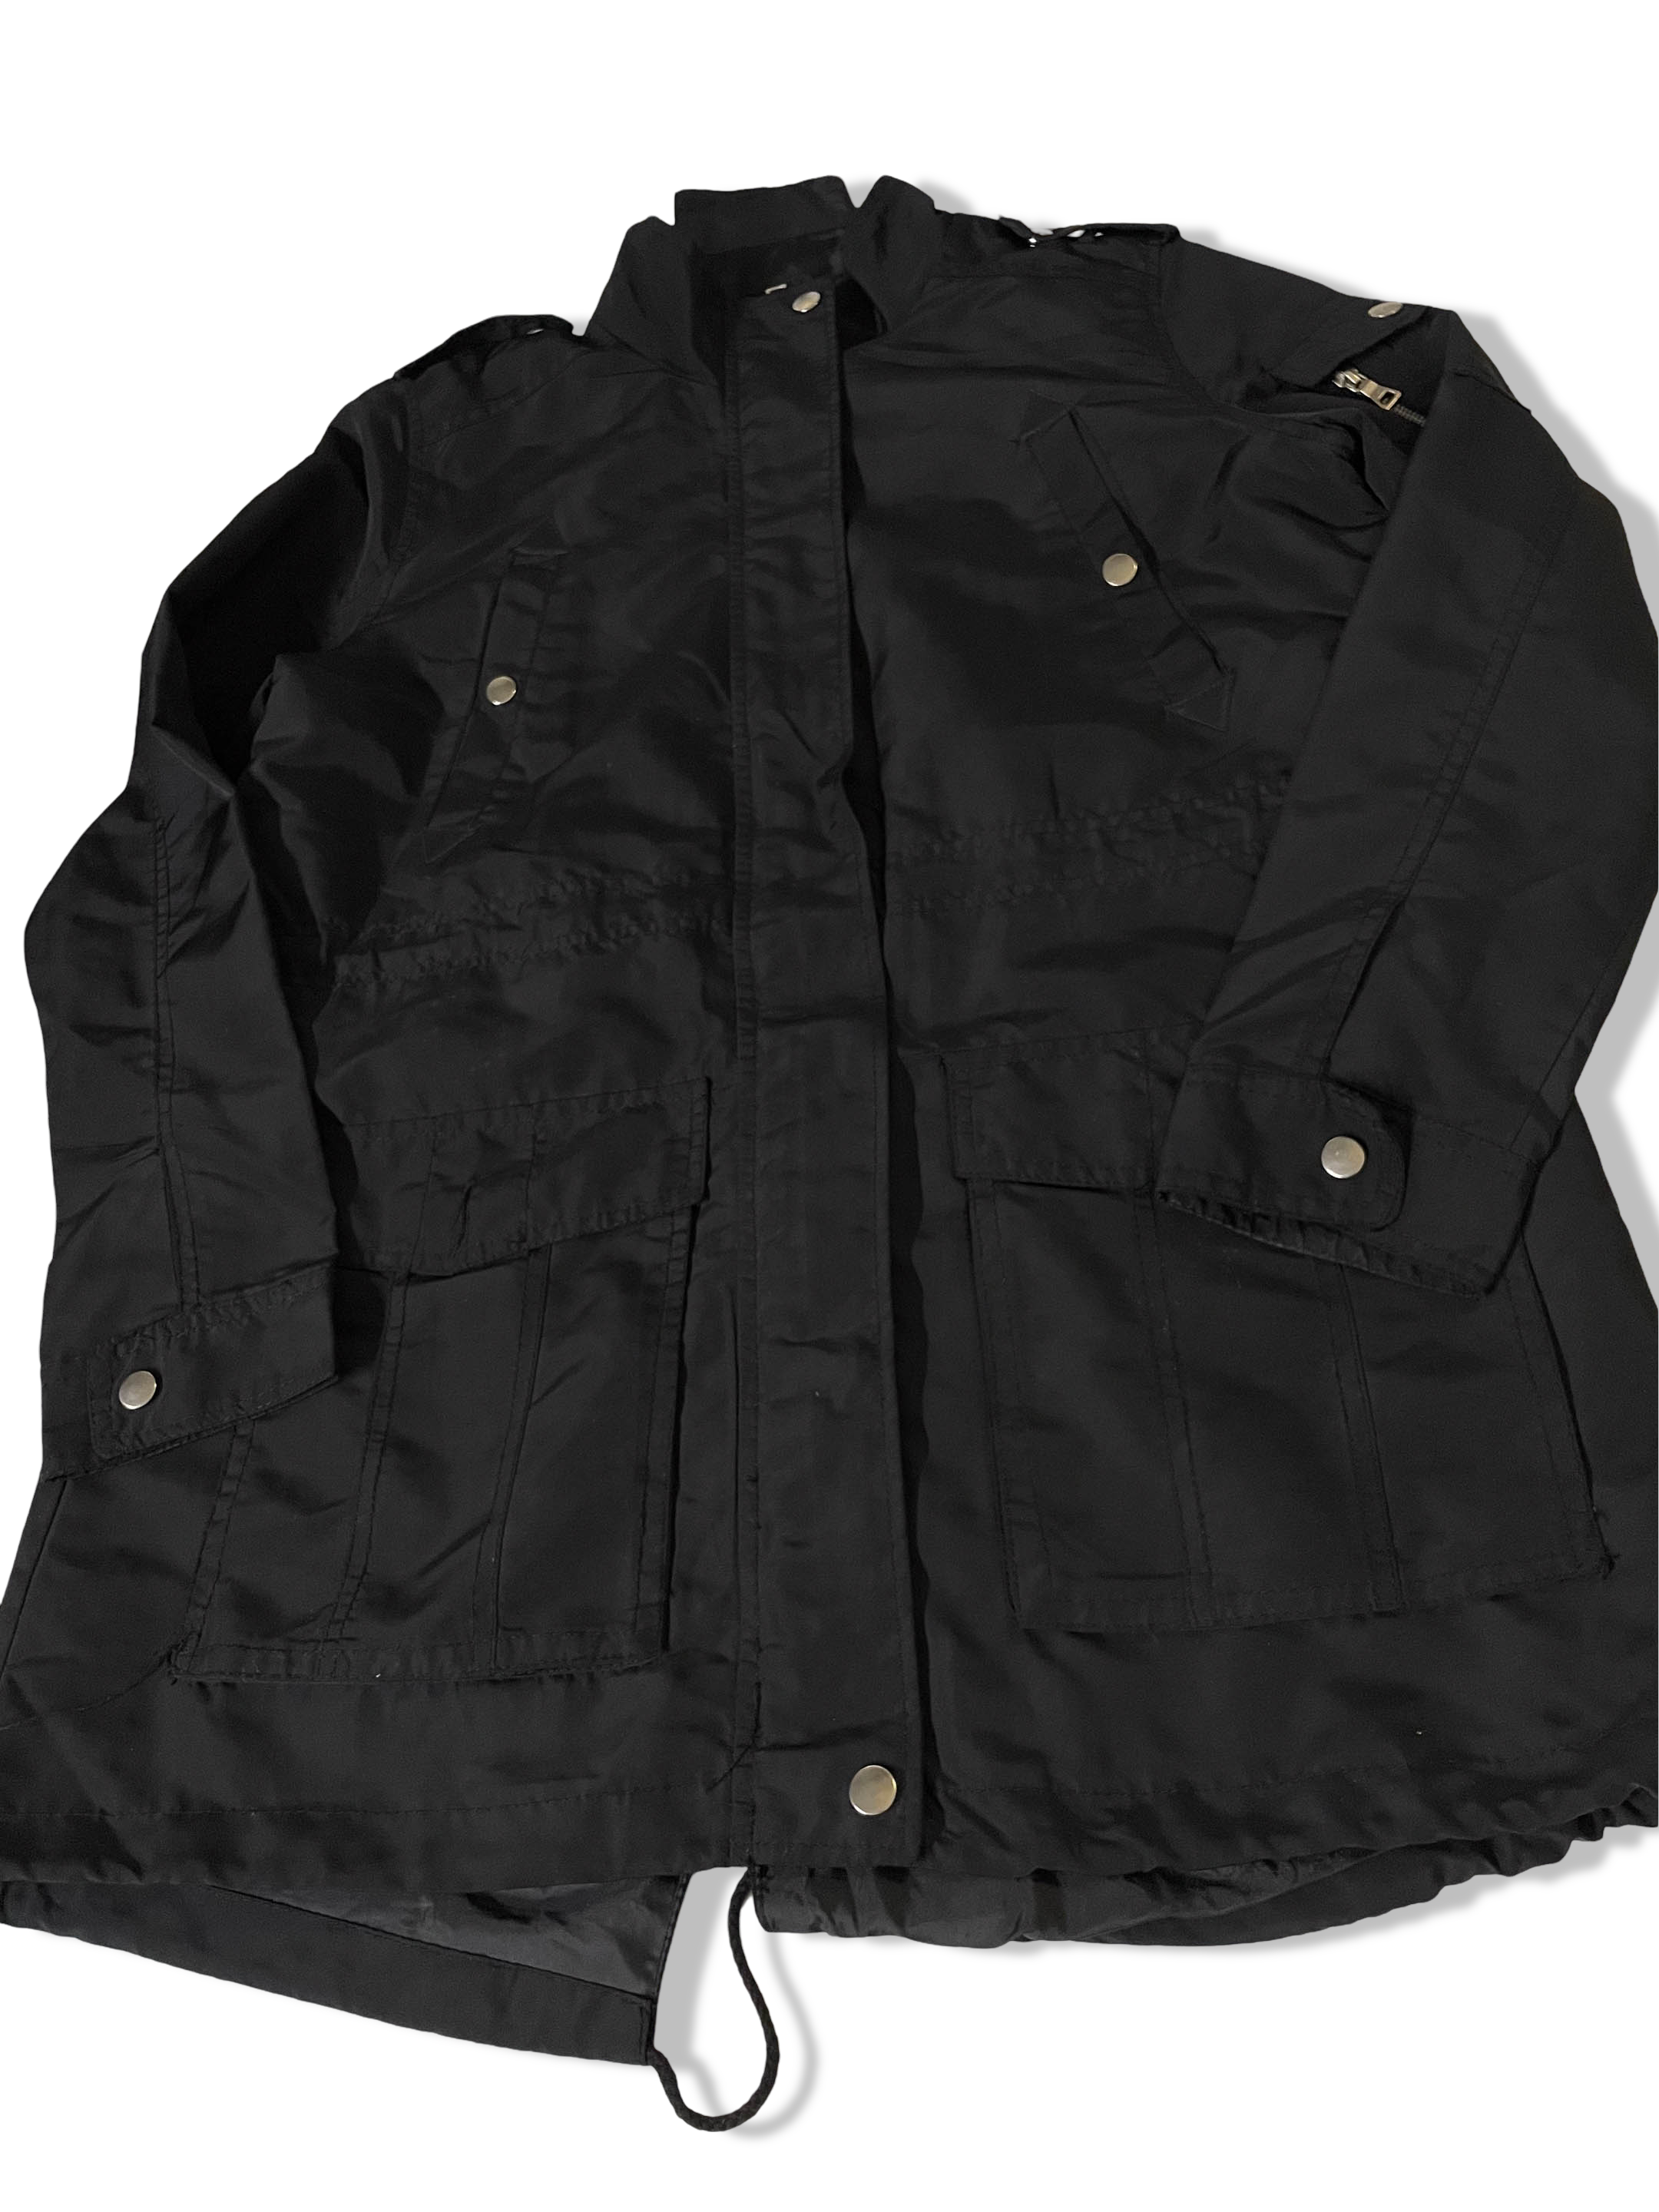 Vintage Glamsia Made in China Black Windbreaker full zip men's jacket in XL|3795